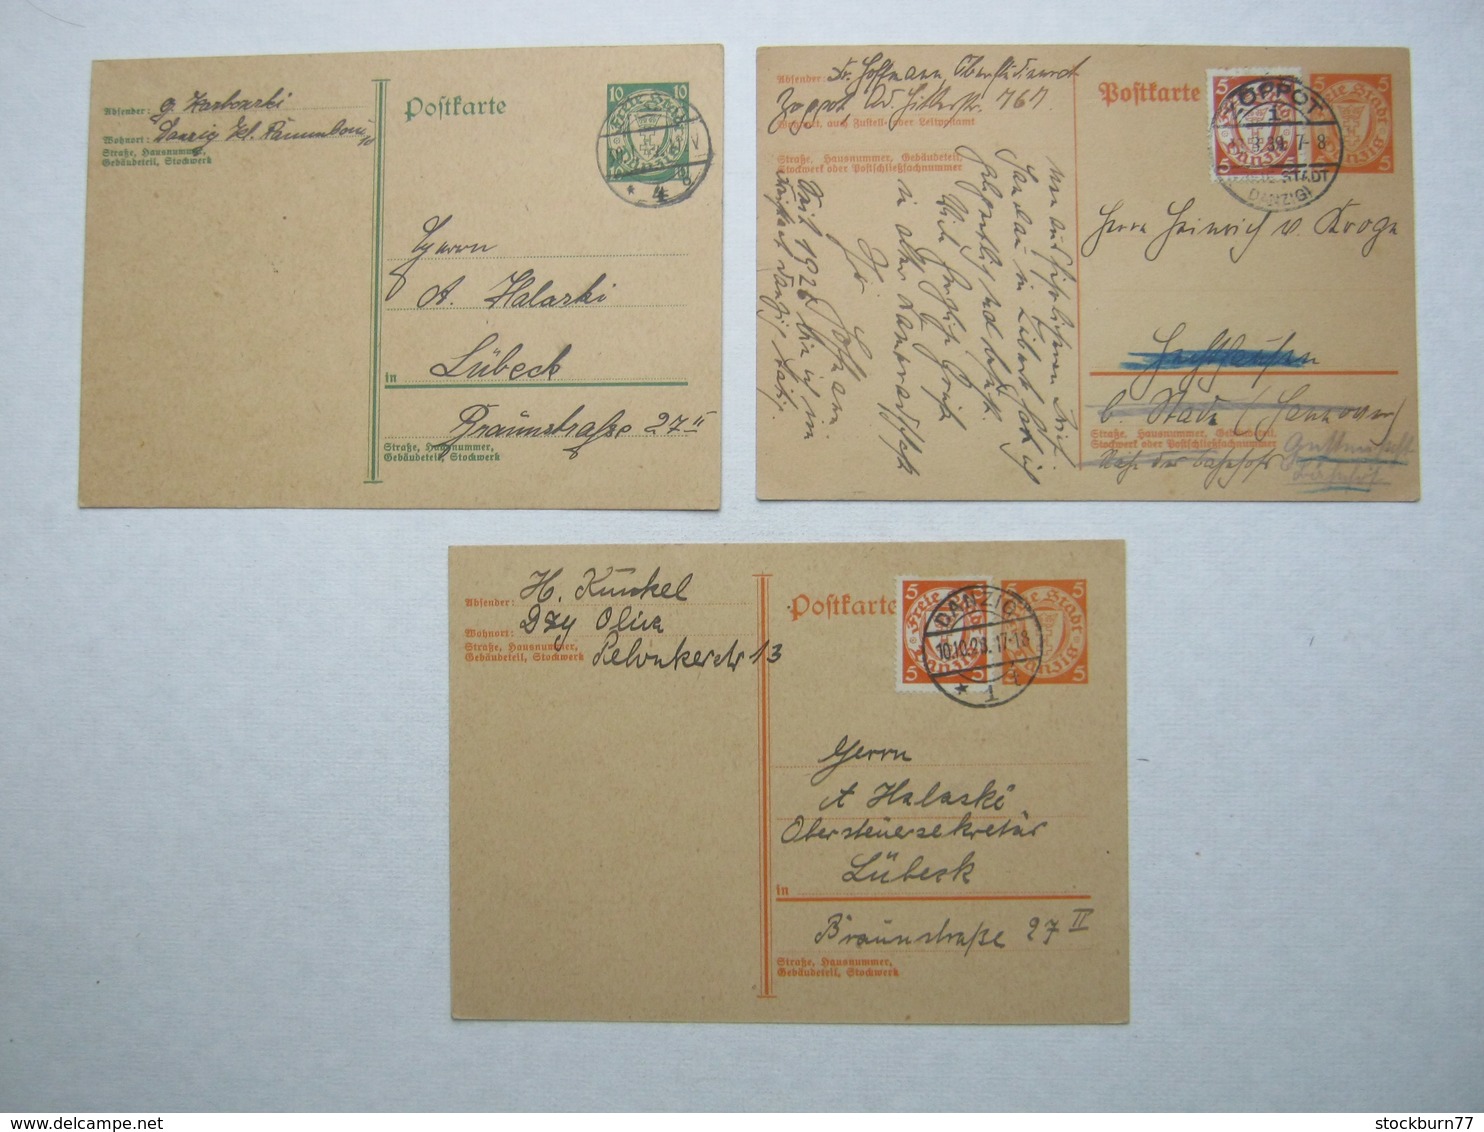 DANZIG , 3 Ganzsachen Verschickt - Postal  Stationery